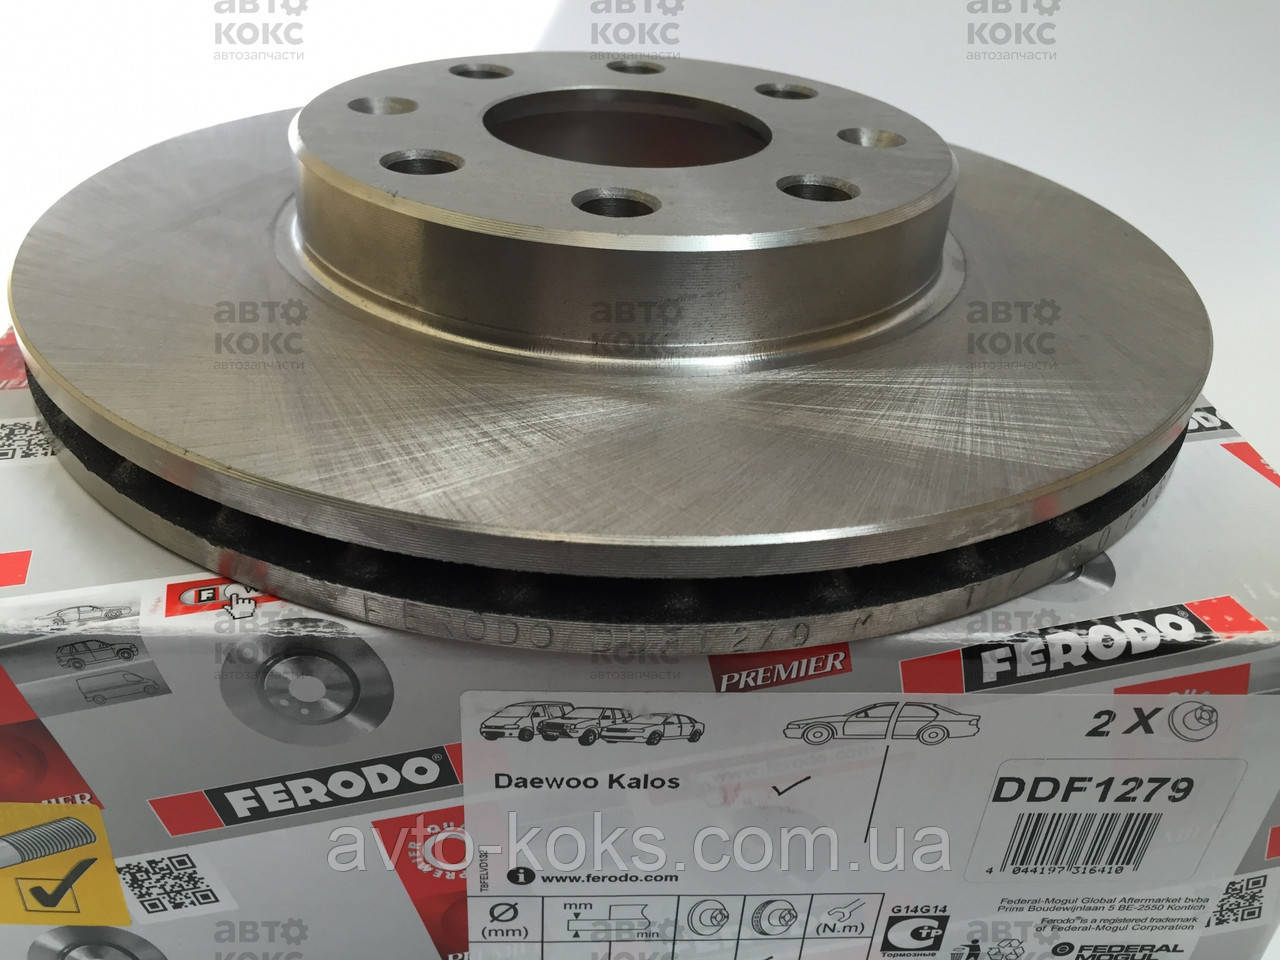 Тормозной диск Ferodo DDF1279 на Chevrolet Aveo, Kalos, Spark (R 13) 